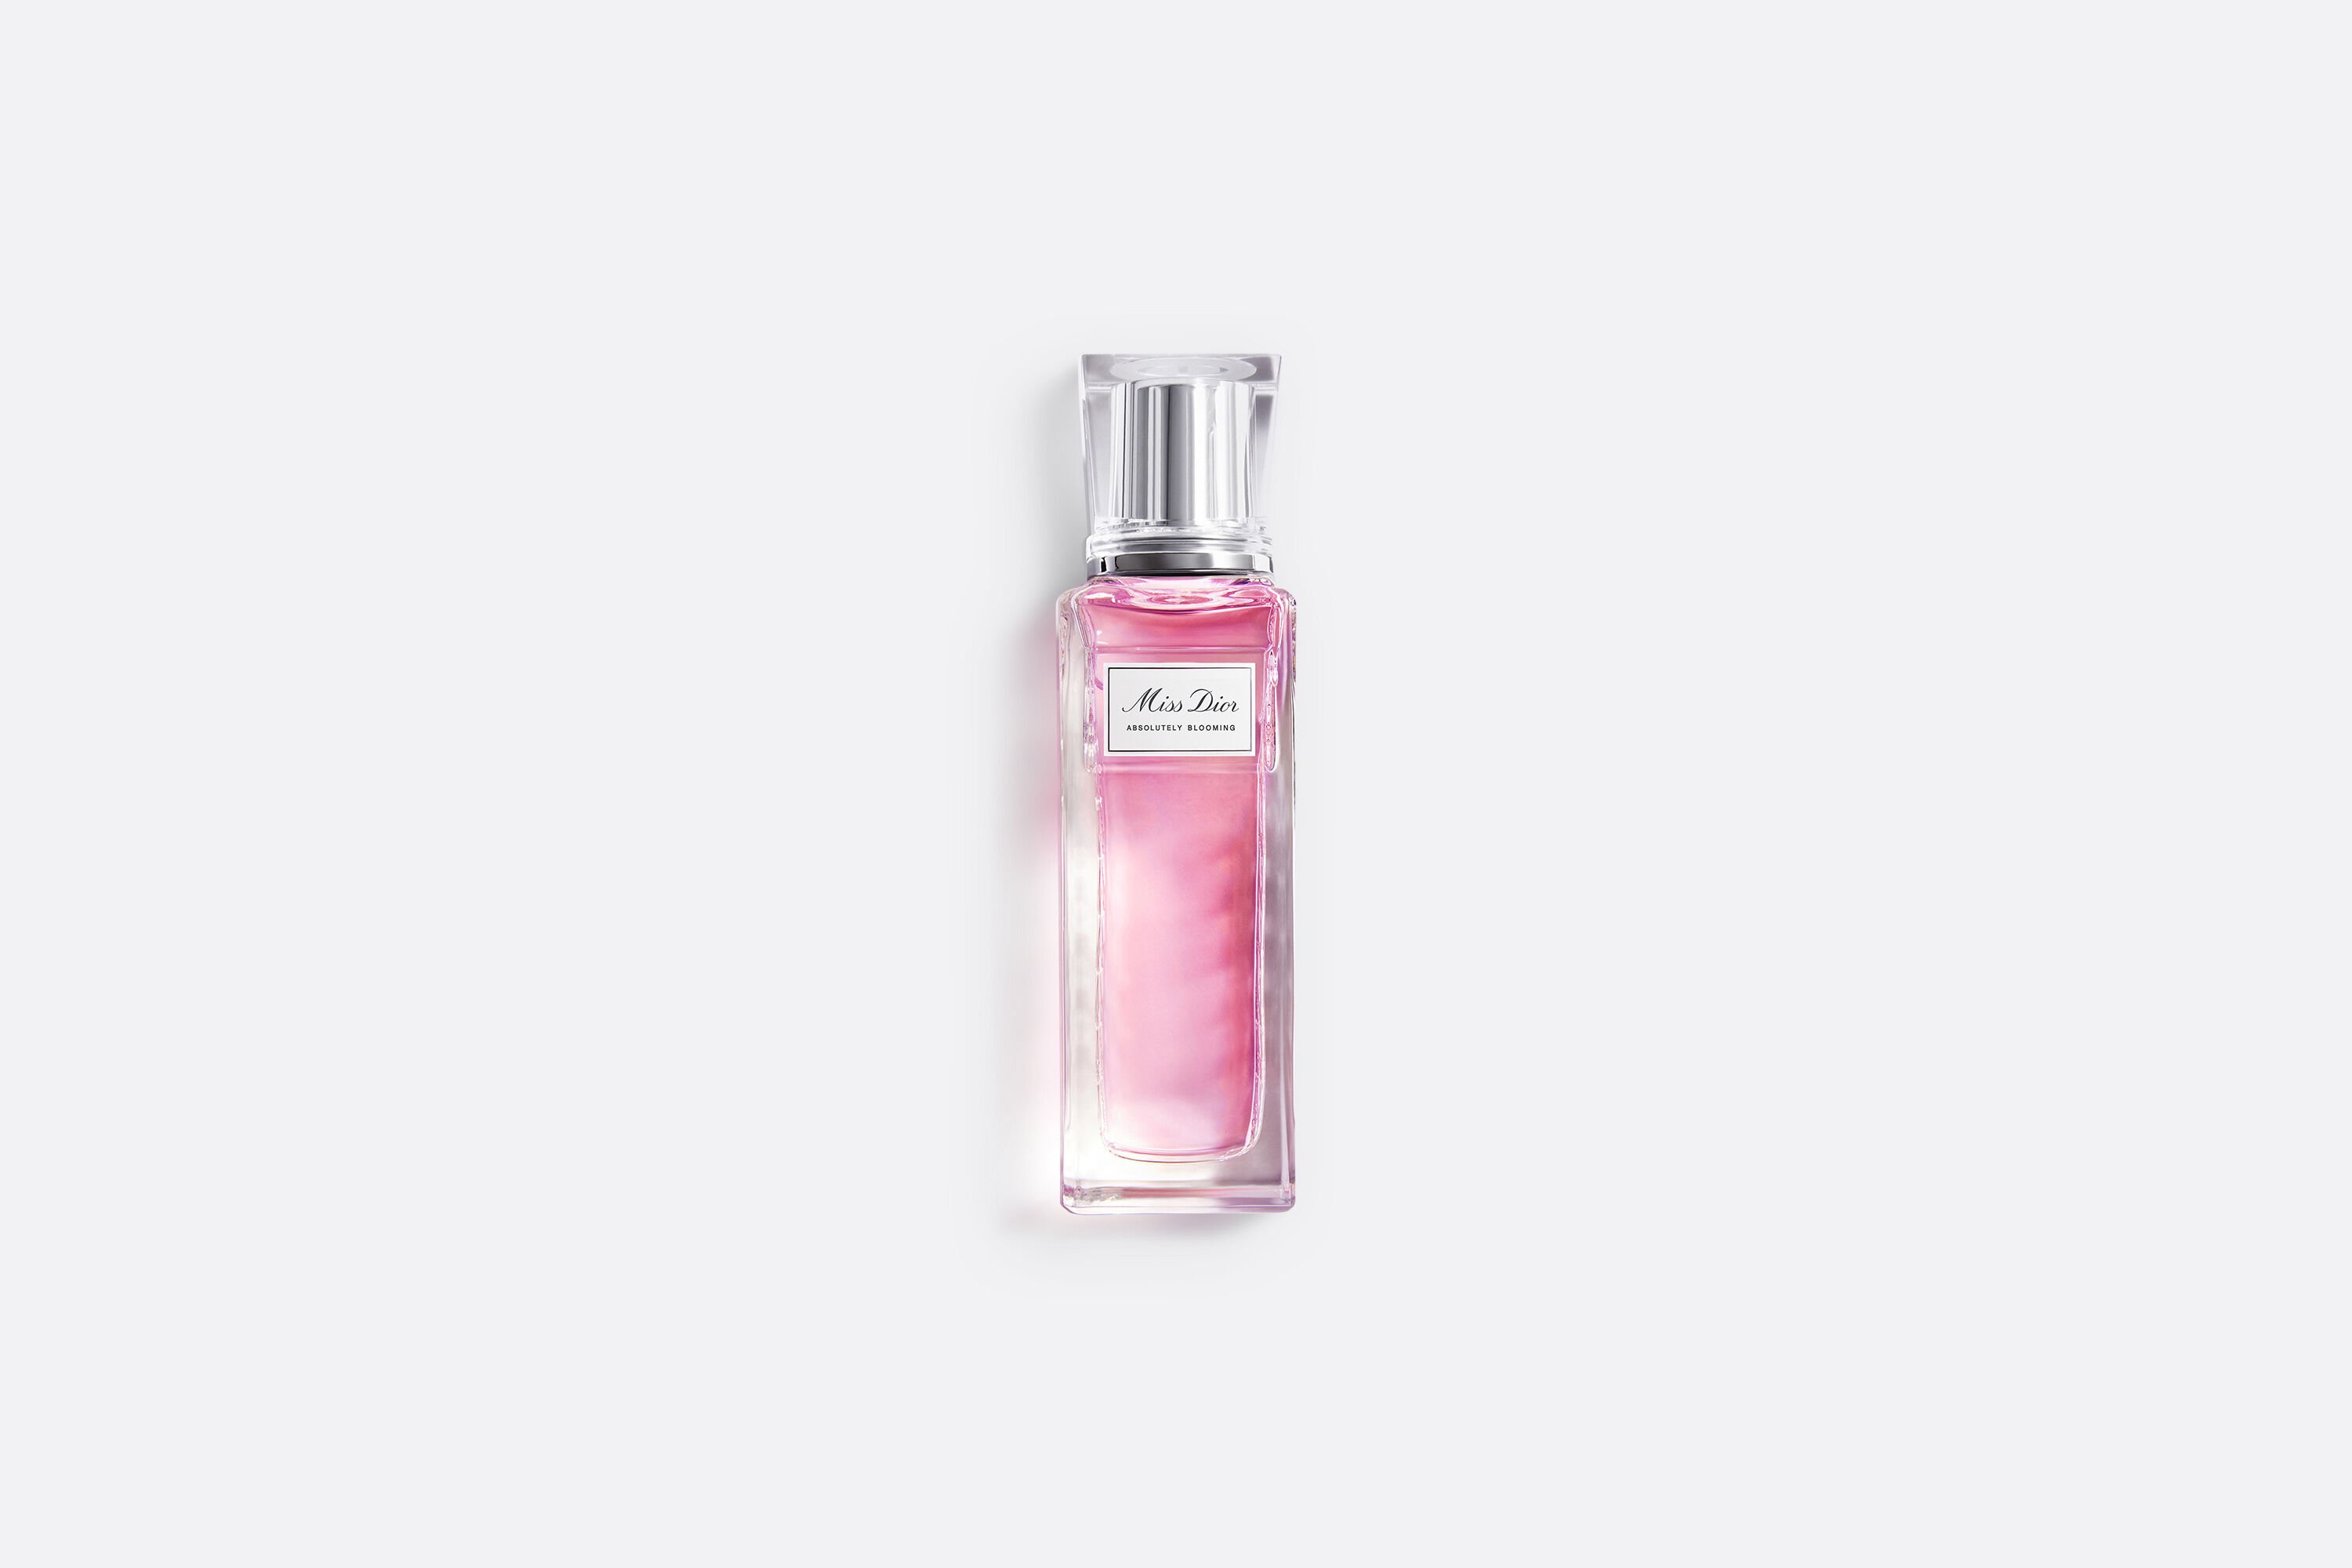 DIOR Miss Dior Absolutely Blooming Eau de Parfum Roller-Pearl, 0.67-oz. -  Macy's